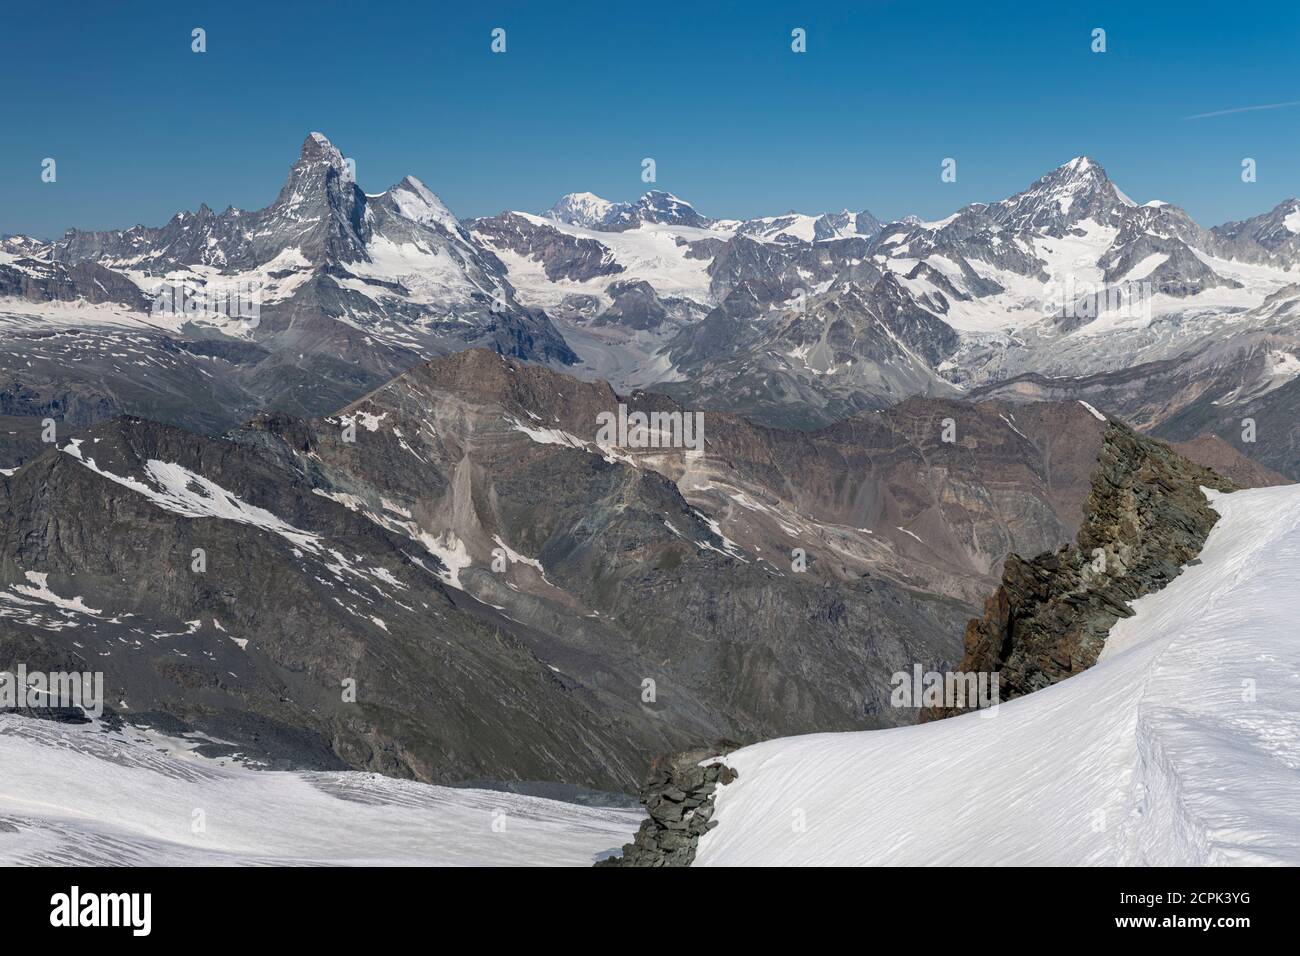 Suisse, Canton du Valais, Saastal, Saas-Fee, vue d'Allalinhorn à Matterhorn, Dent d'Herens, Mont blanc, Grand Combin, Dent Blanche Banque D'Images